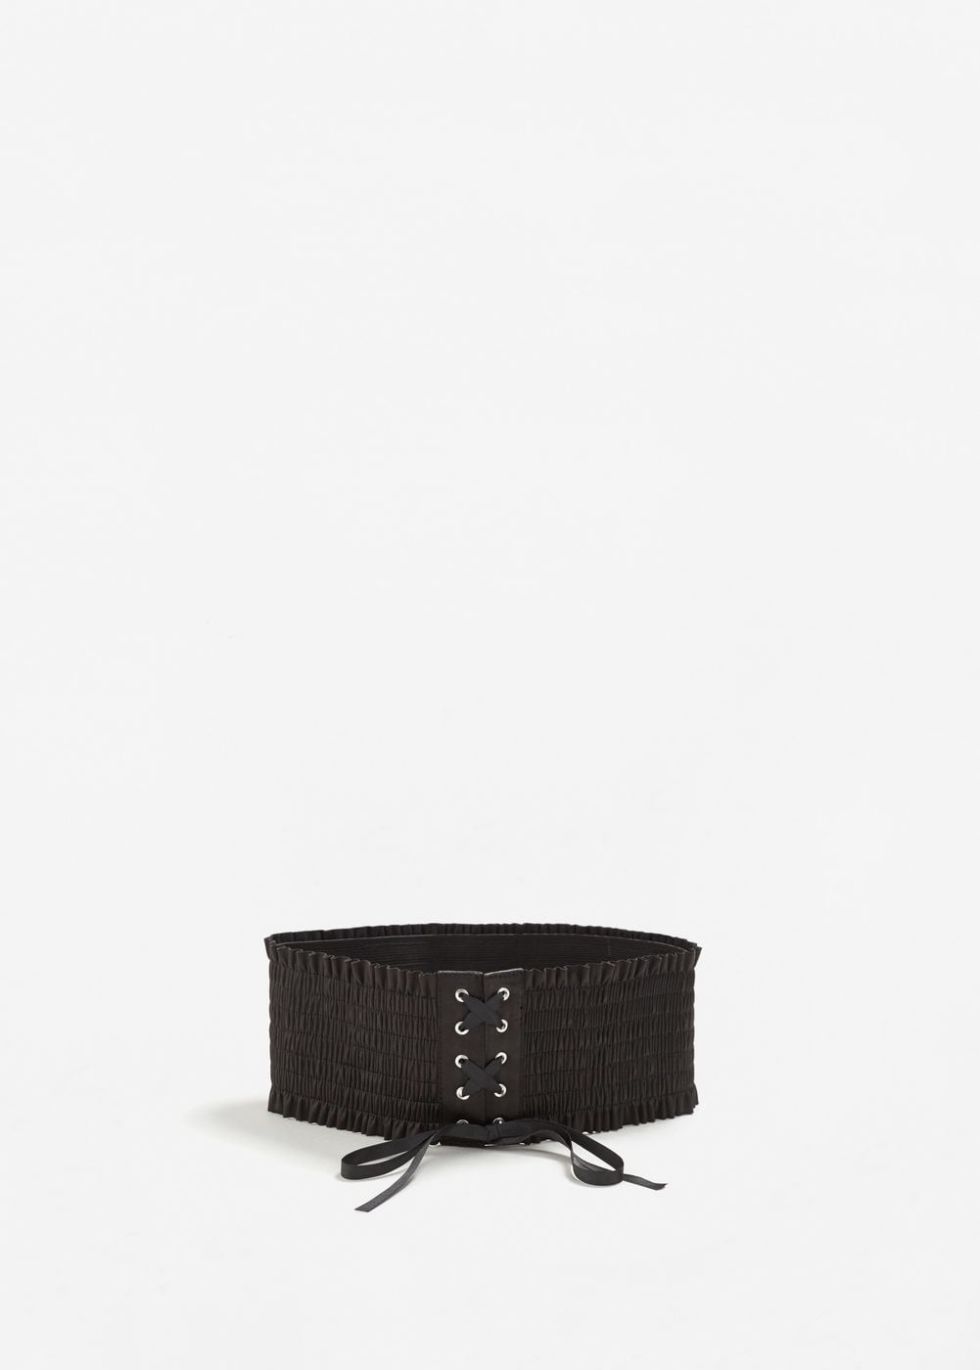 Black, Leather, Fashion accessory, Belt, Wallet, 